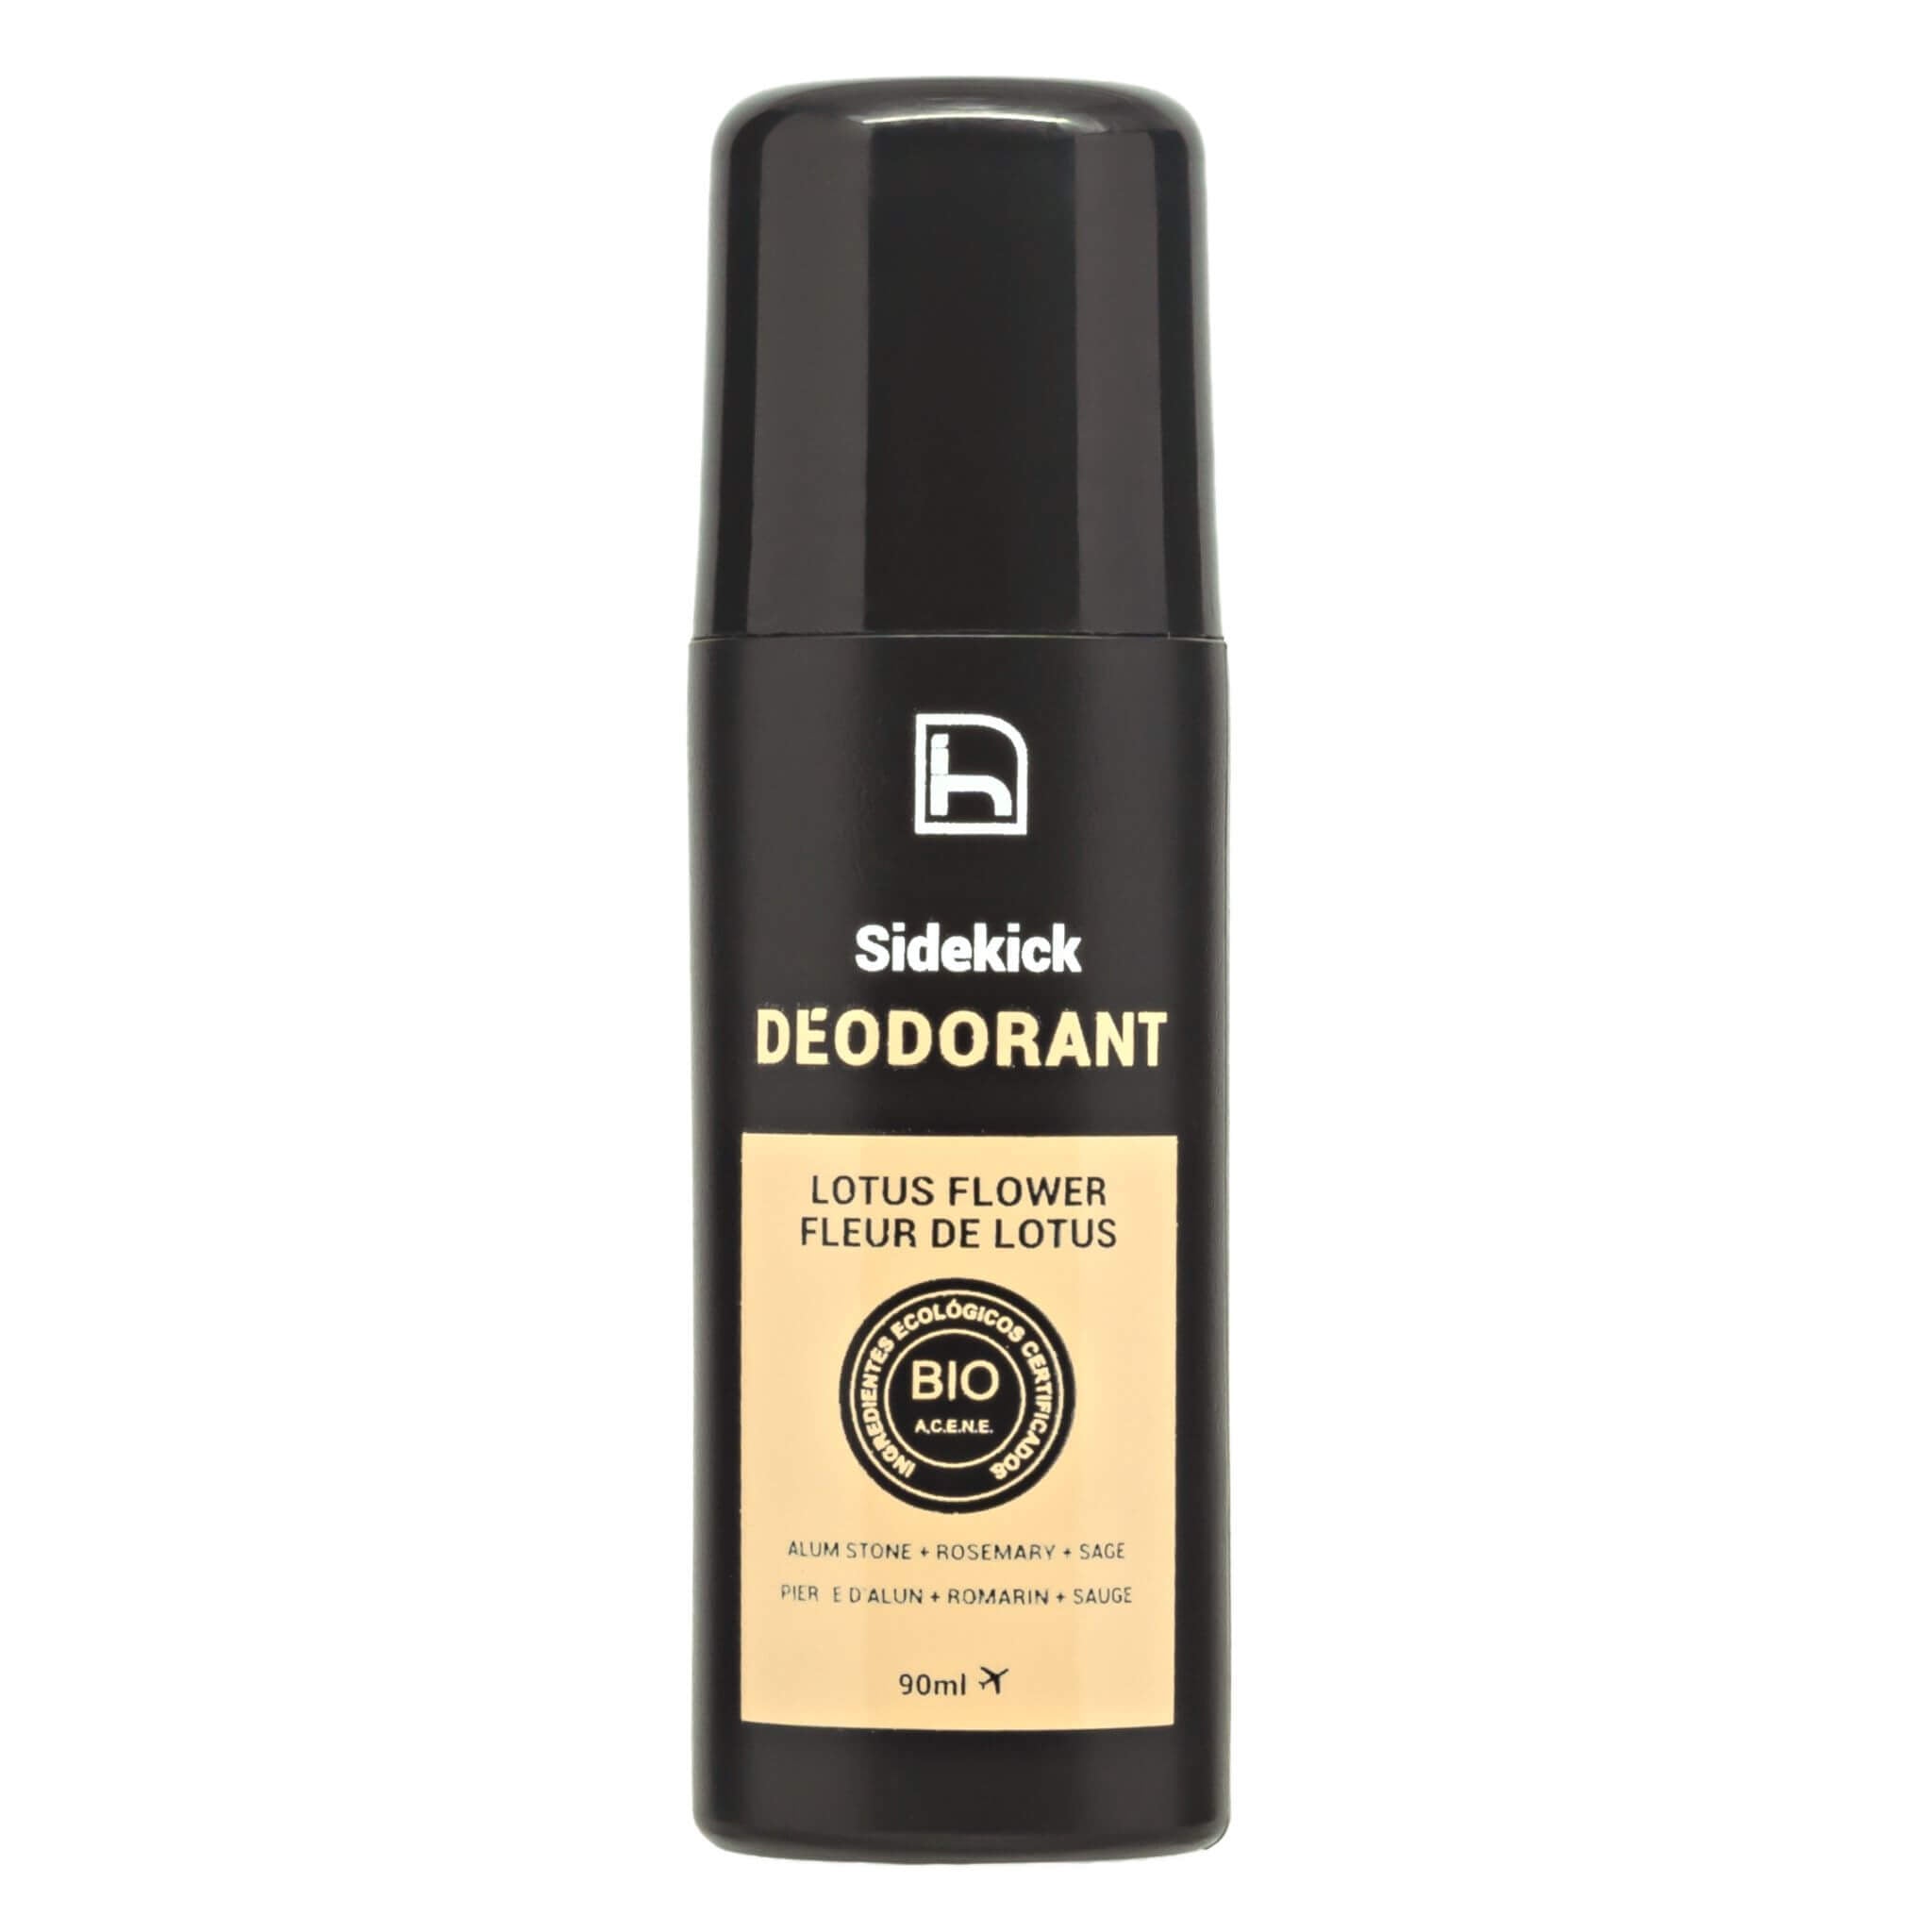 Natural roll-on deodorant for men. Bio and vegan certified